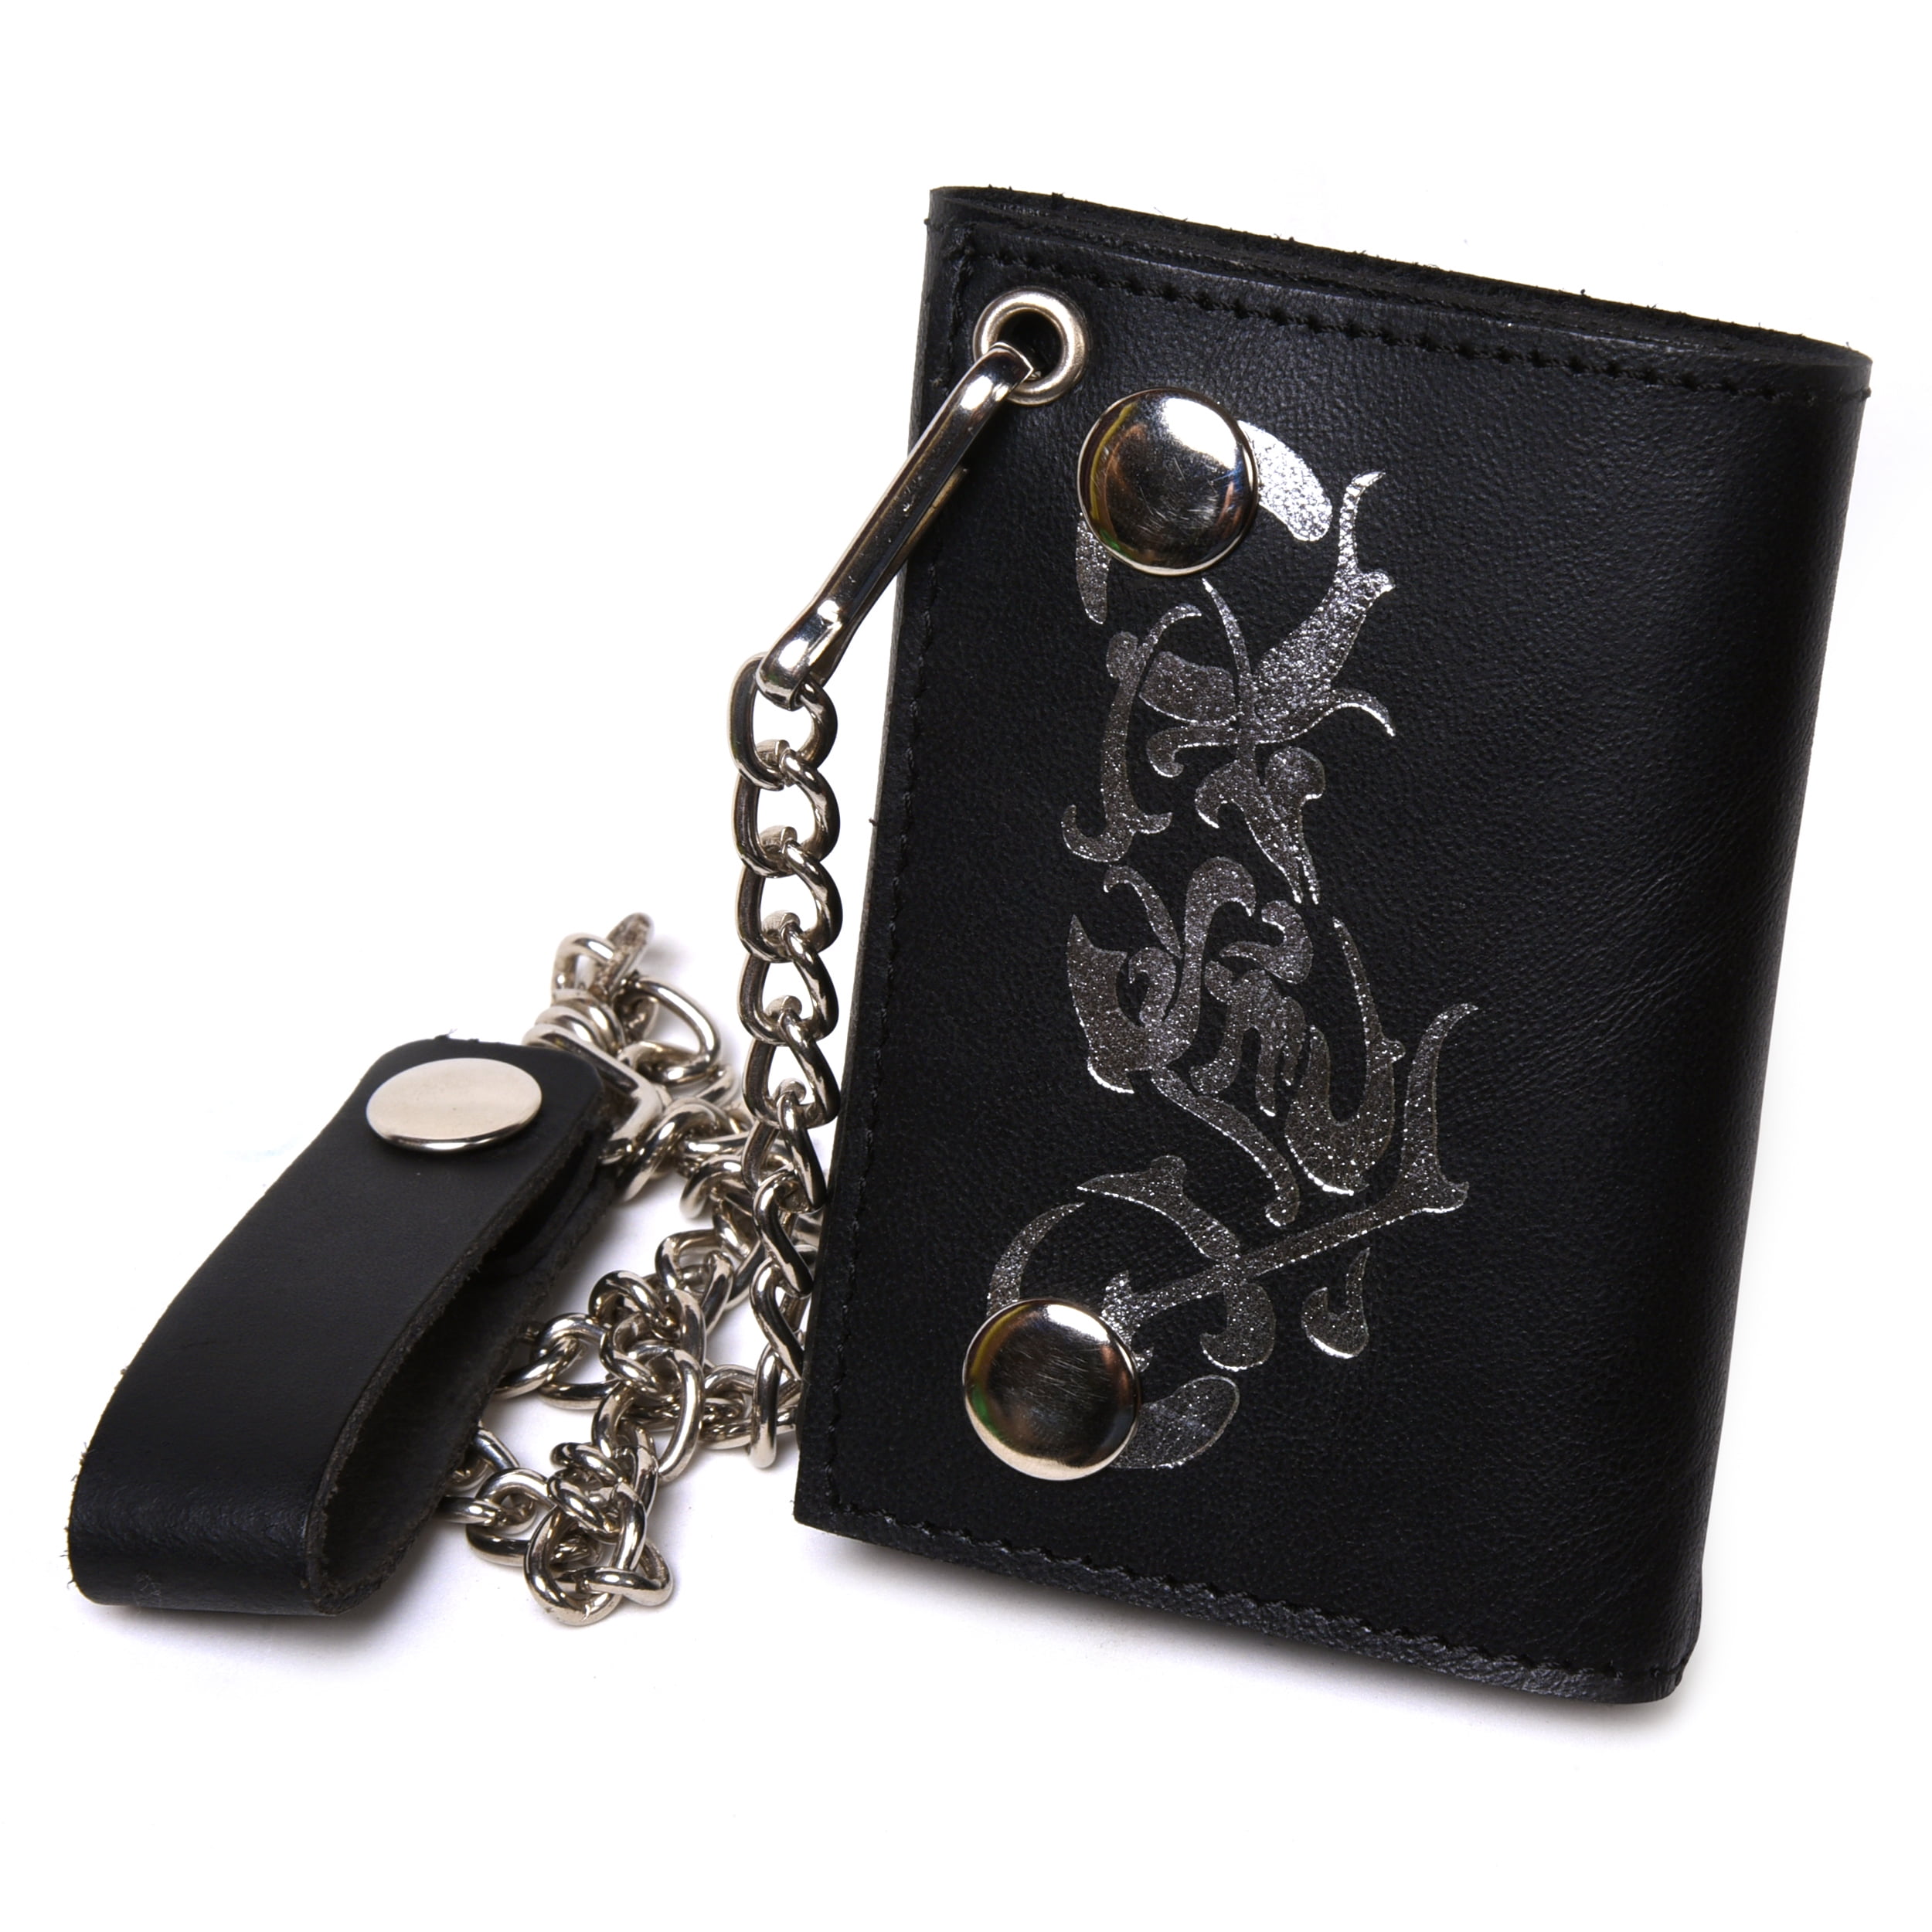 Chopper Cross Genuine Leather Trifold Biker's Wallet ID Card Holder w/ Chain 